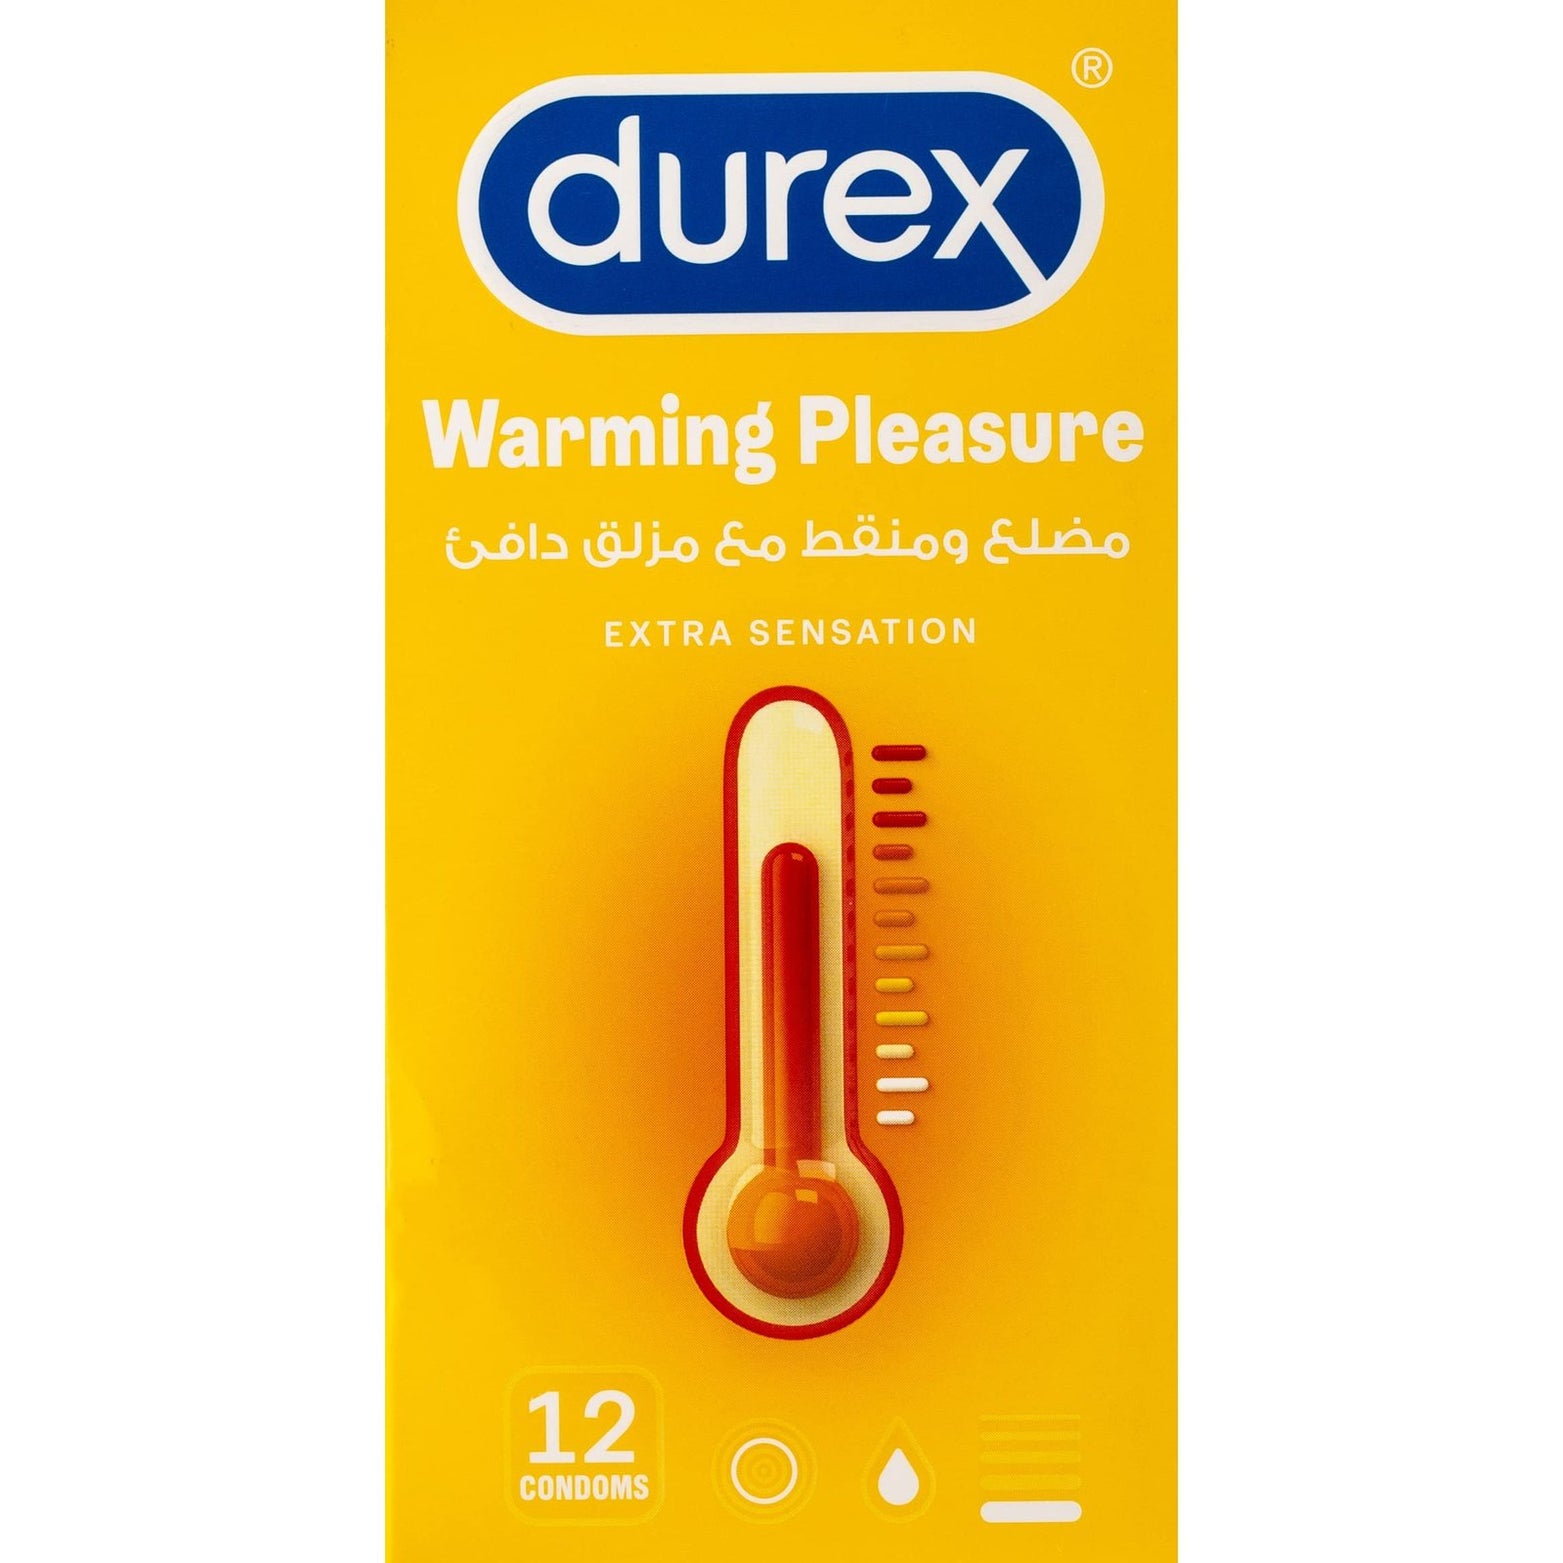 Durex Warming Pleasure Condoms 12pcs - Med7 Online